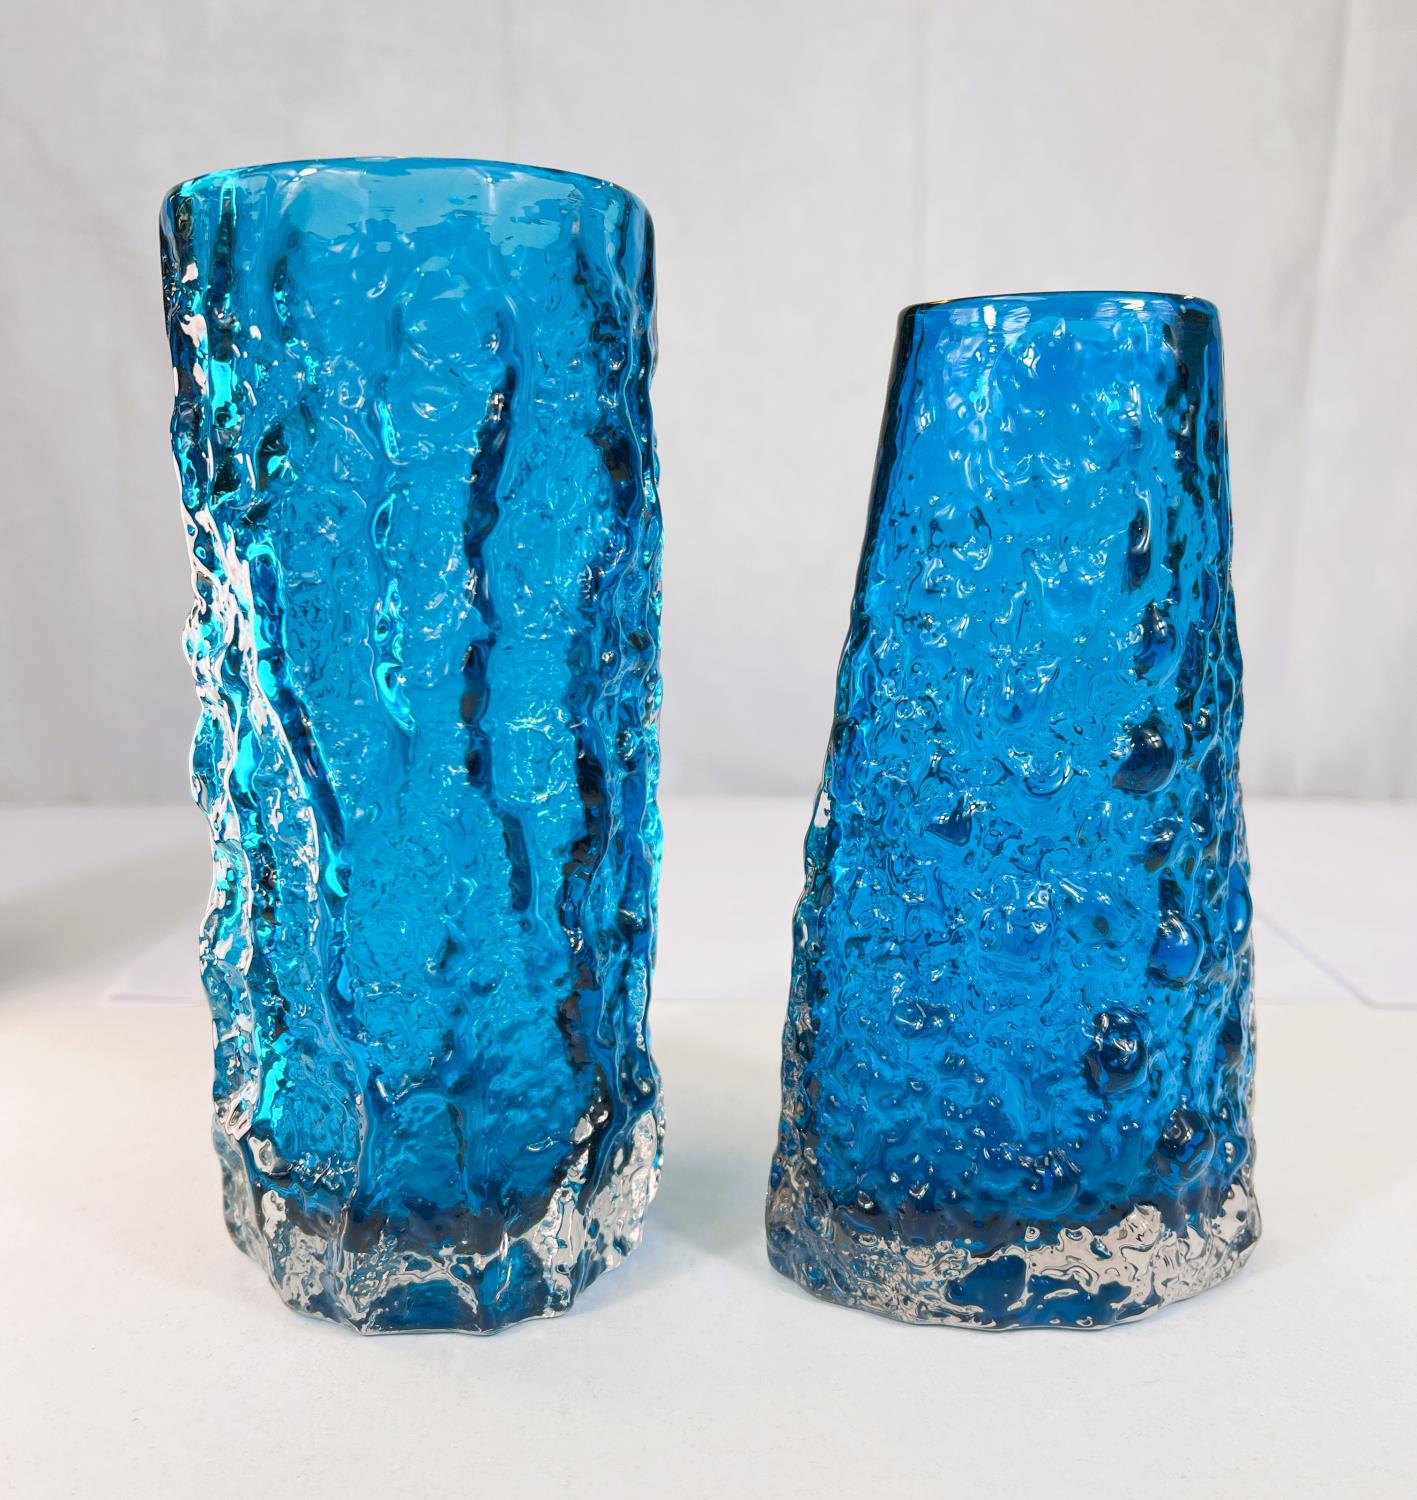 Whitefriars Geoffrey Baxter designed 'Volcano' glass vase in Kingfisher blue pattern 9717,